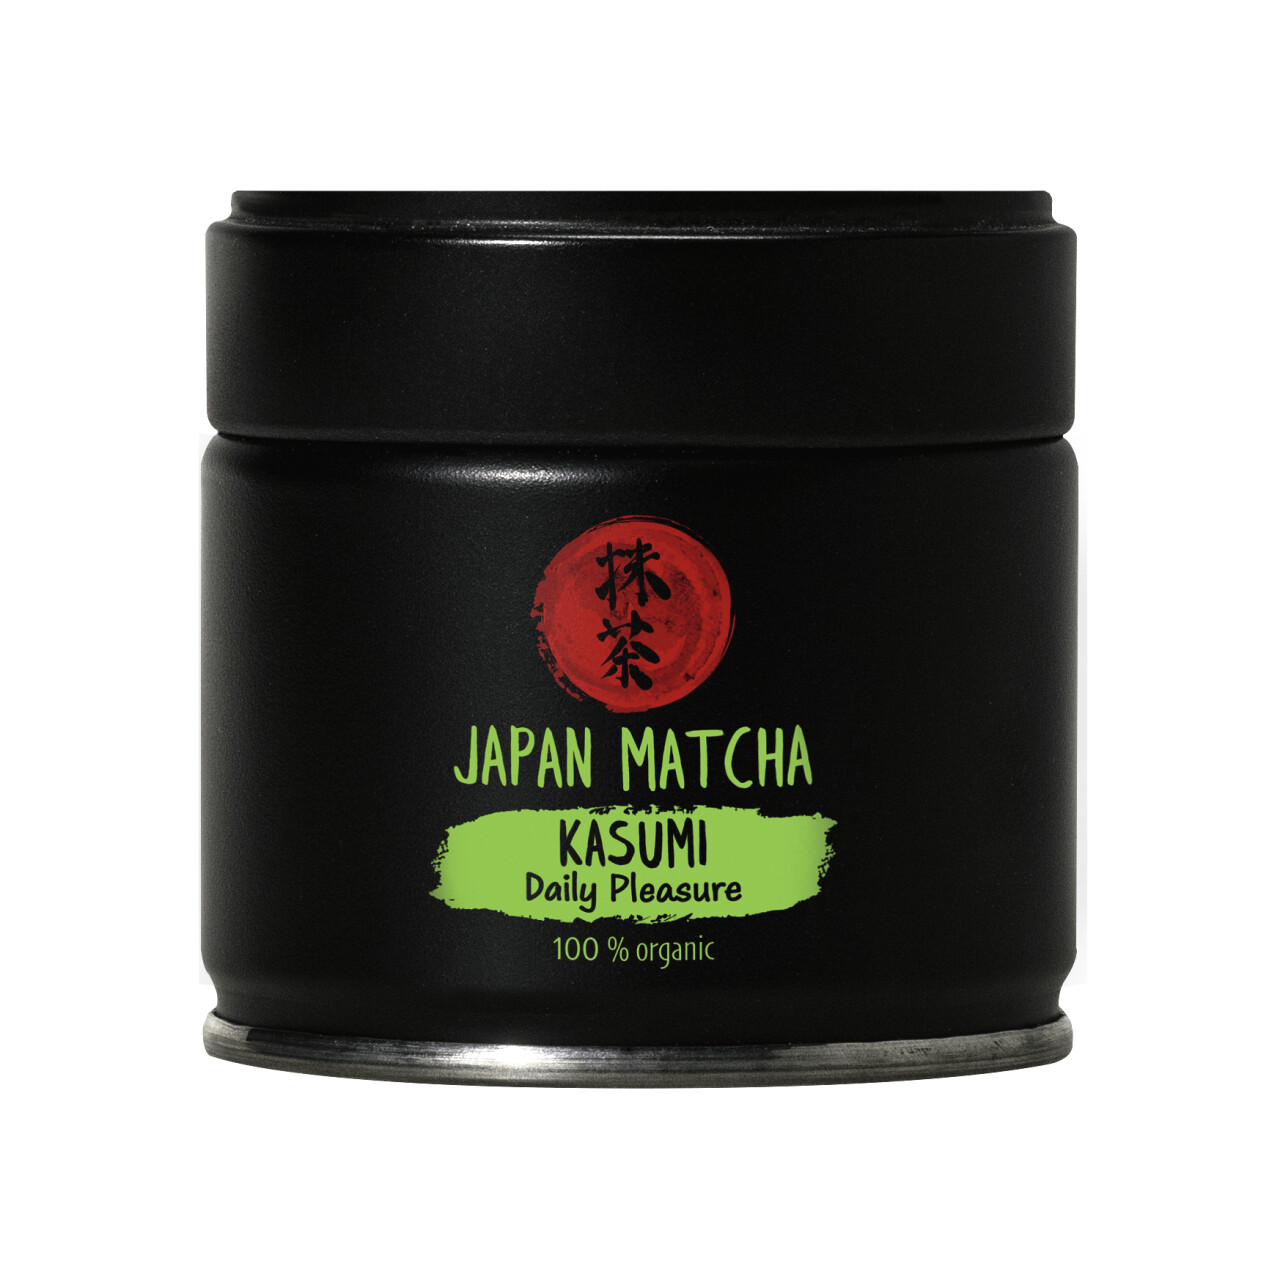 Japan Matcha Kasumi - Daily Pleasure Organic Tea*, 30g